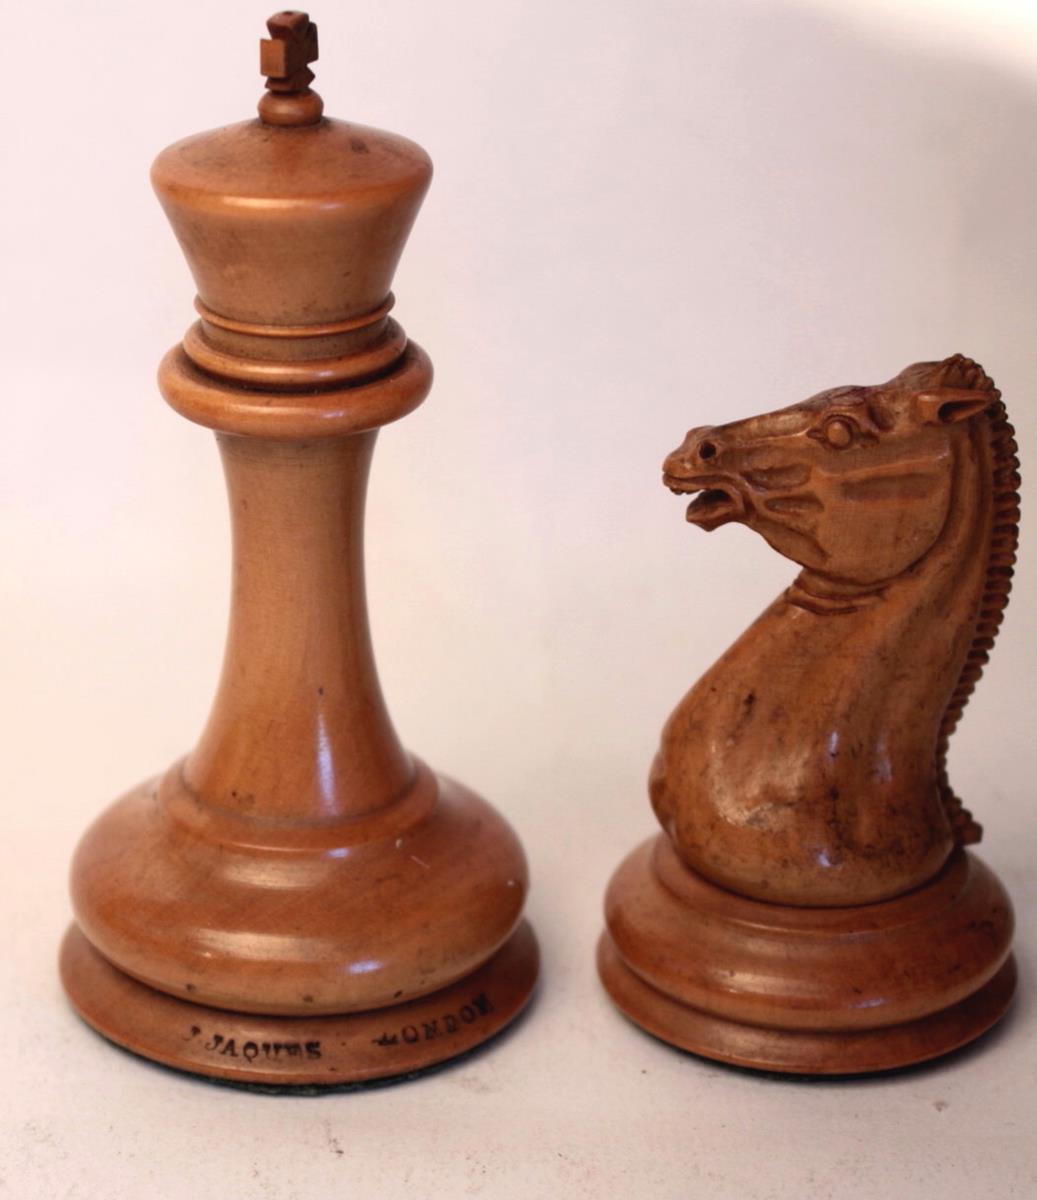 Antique Chess Set